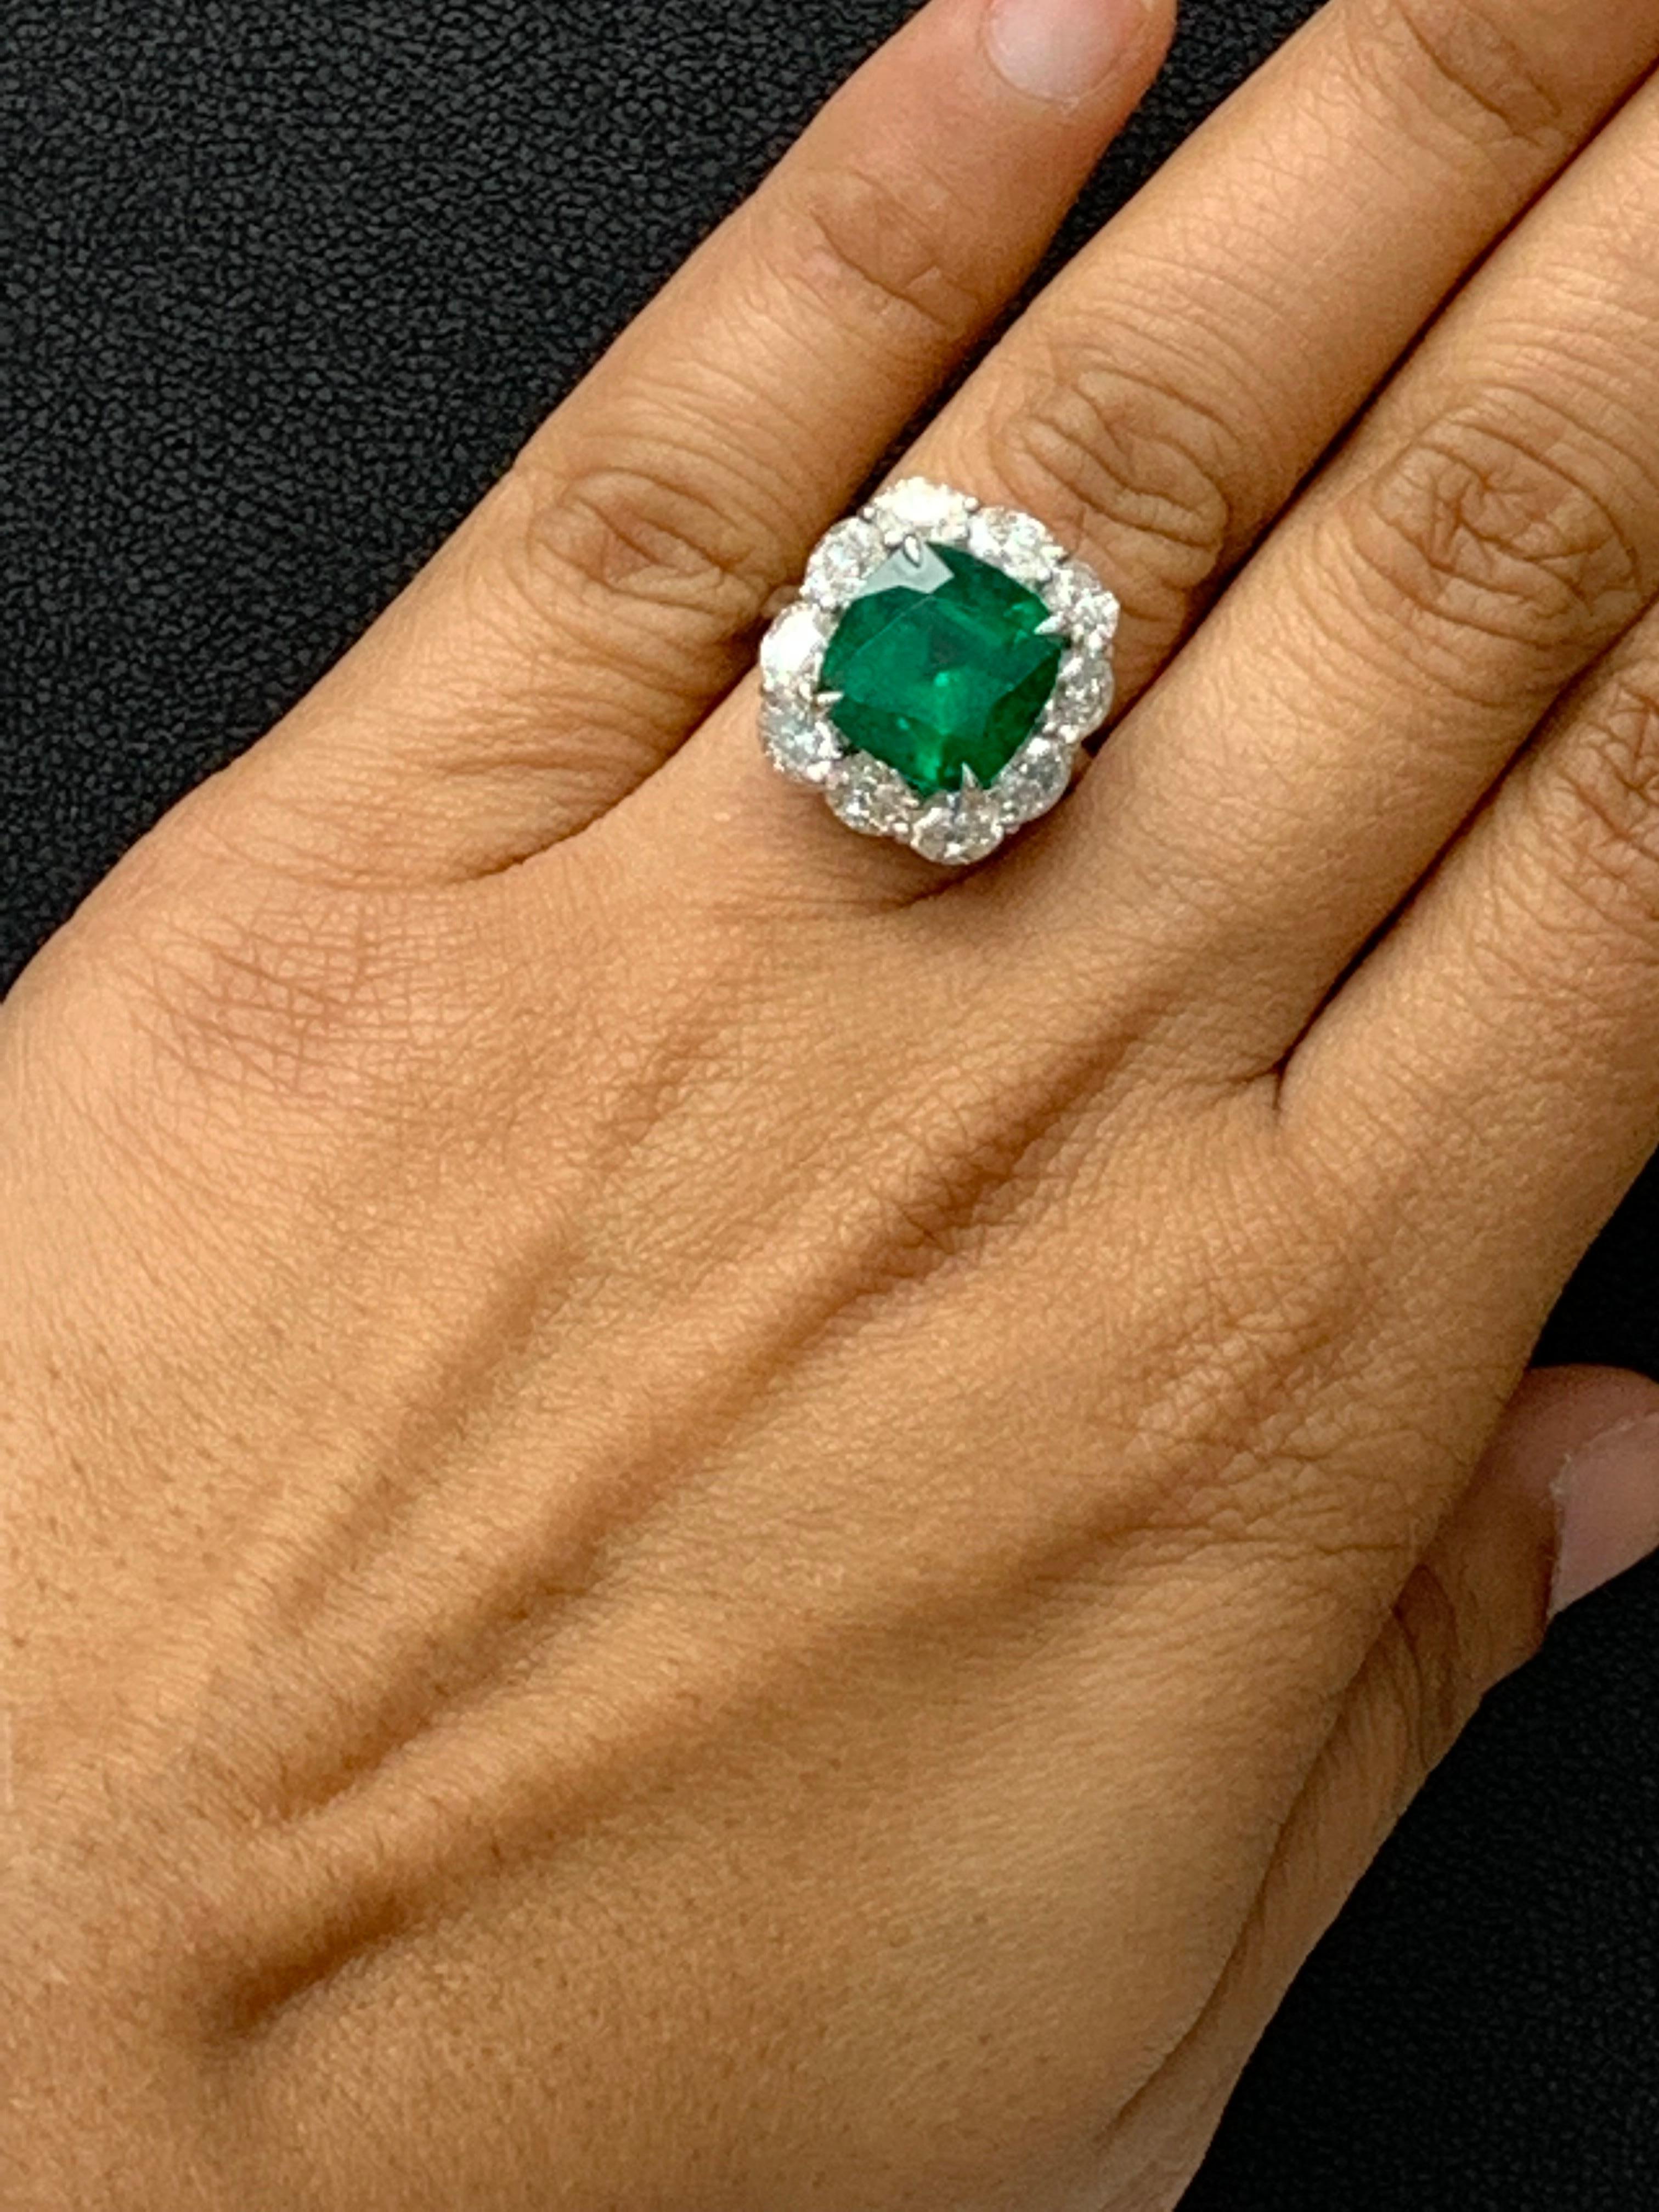 Certified 6.58 Carat Cushion Cut Emerald Diamond Ring in Platinum For Sale 5